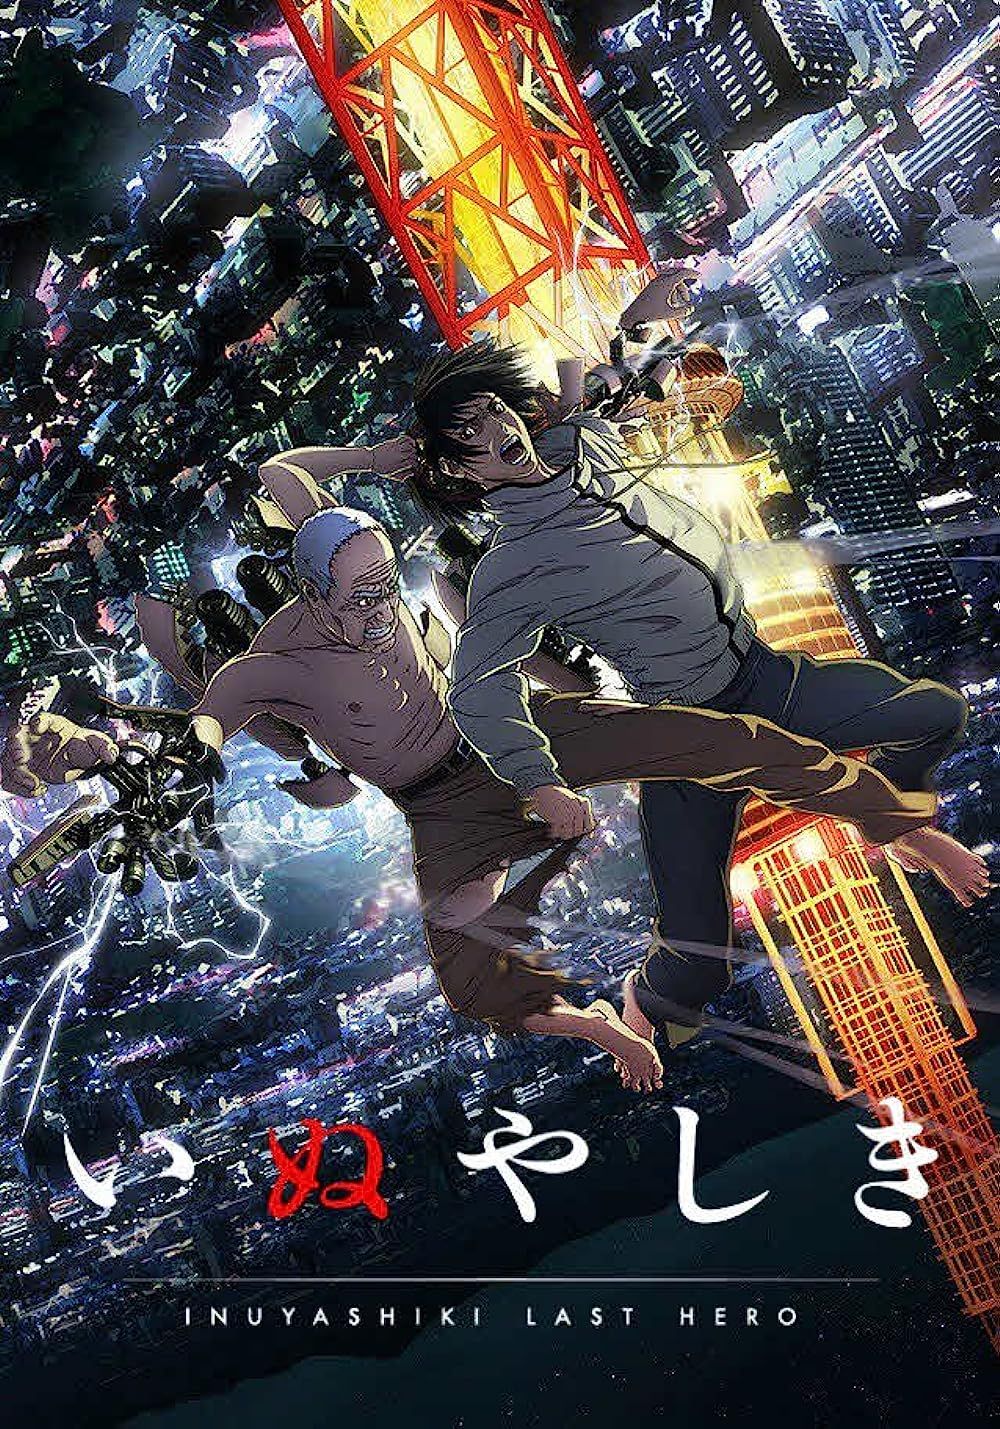 Ichirou Inuyashiki and Hiro Shishigami on the Inuyashiki Last Hero Poster